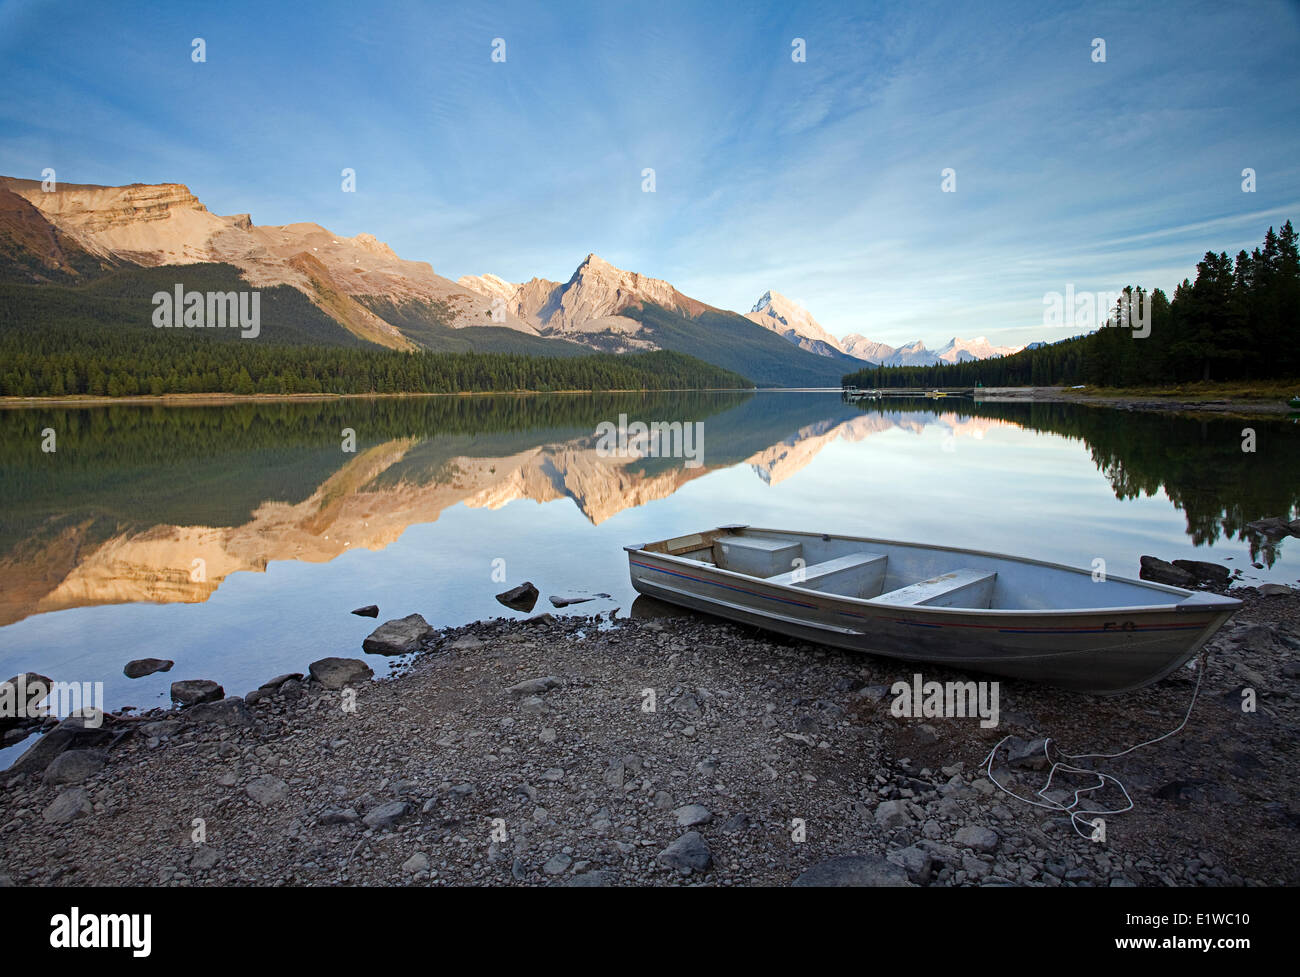 Ruderboot am Ufer am Maligne Lake, Jasper Nationalpark, Alberta, Kanada. Stockfoto